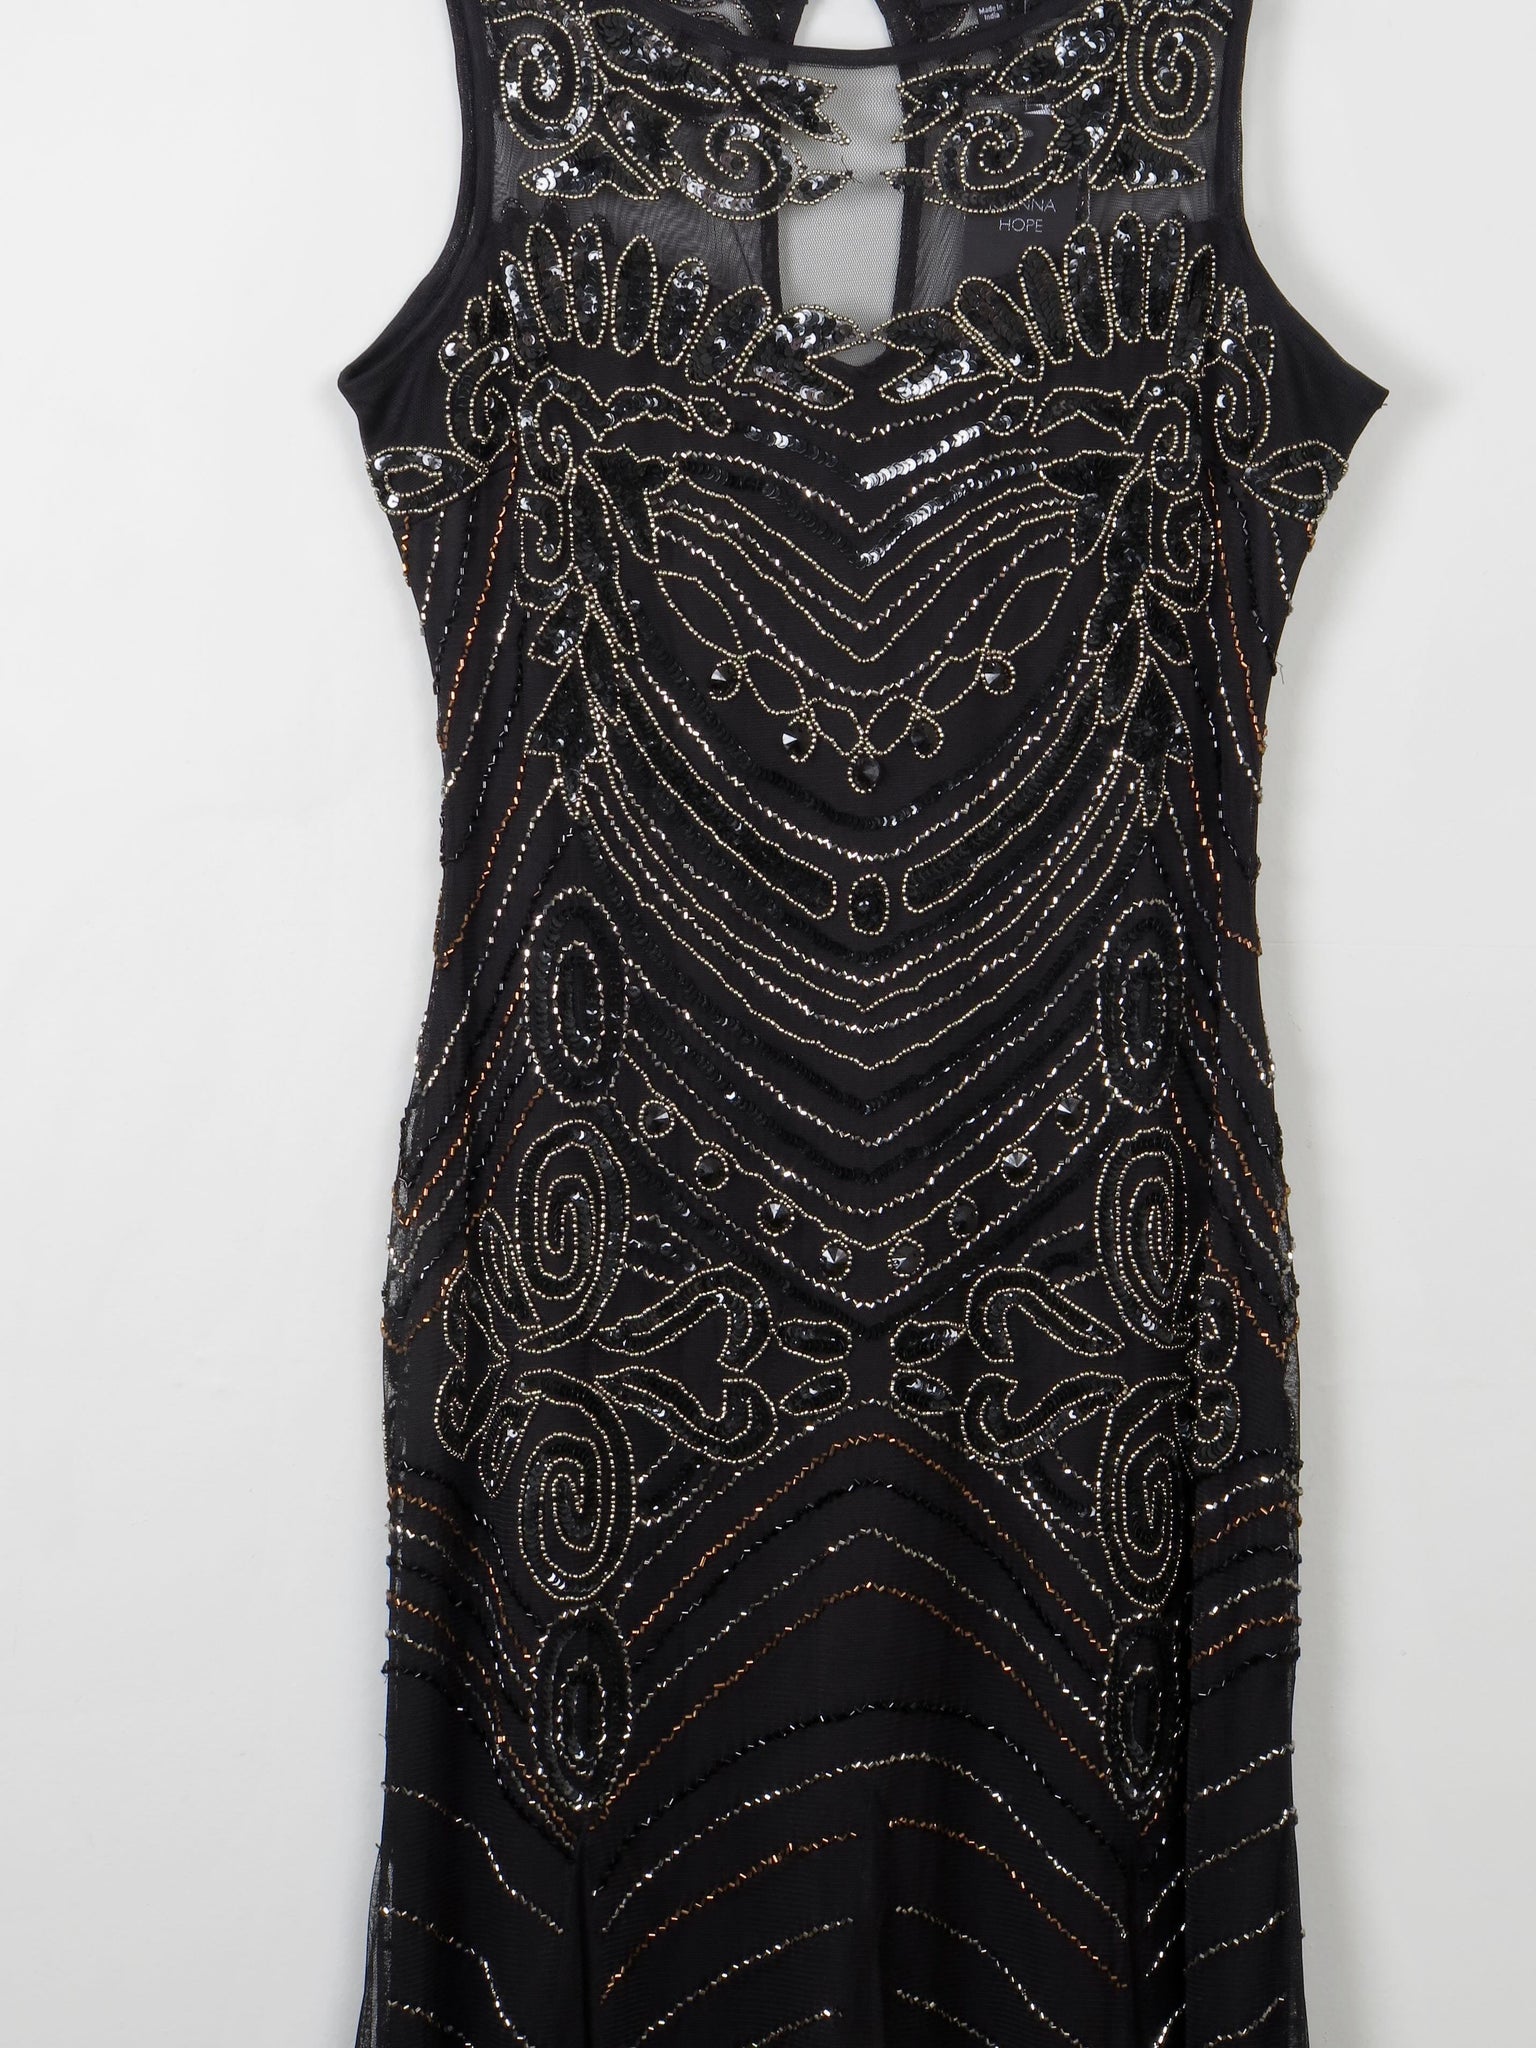 Black Beaded Evening Dress Full Length By Joanna Hope New 14 - The Harlequin